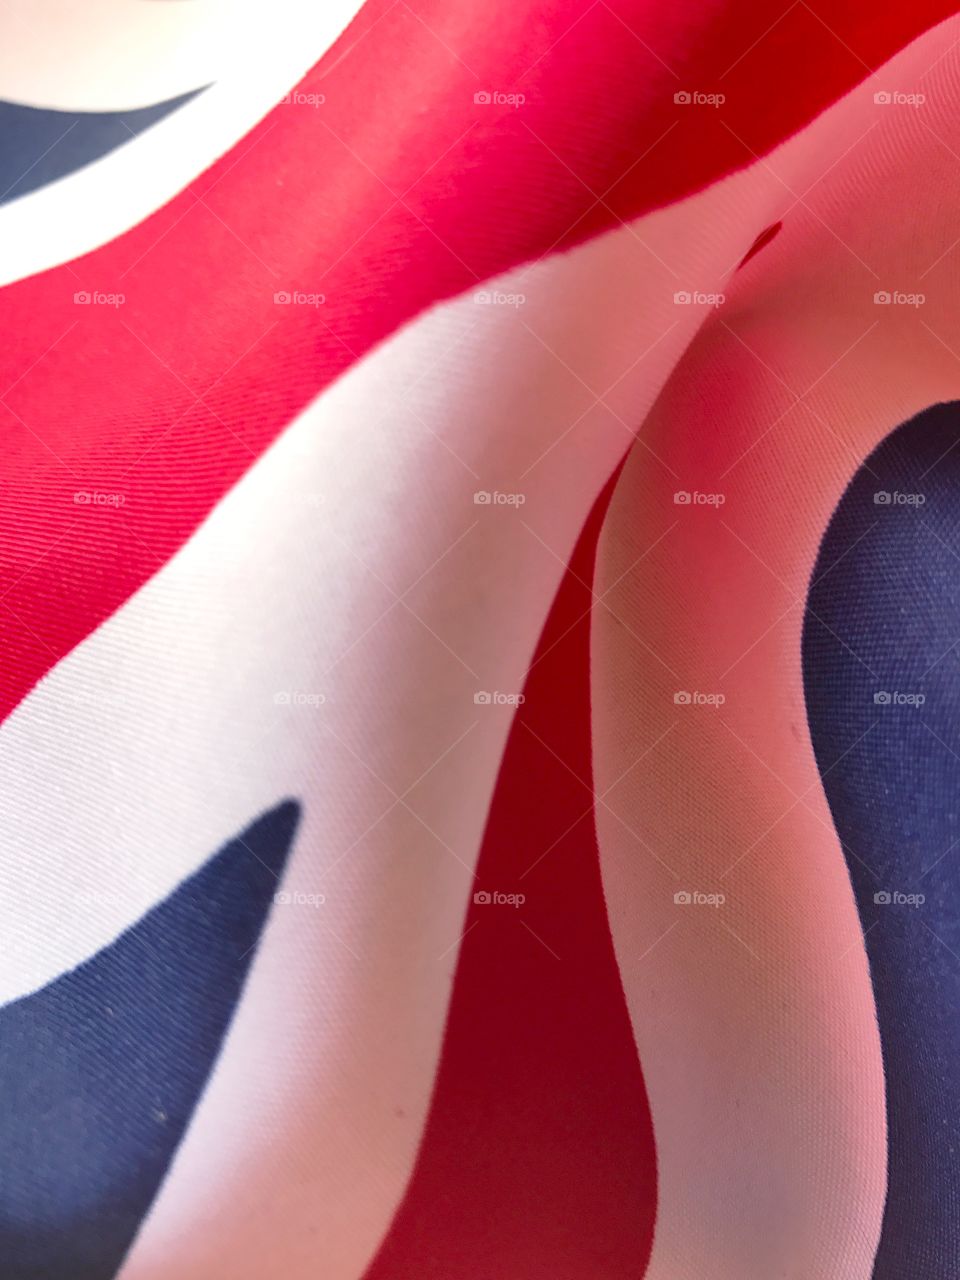 Closeup British flag vertical